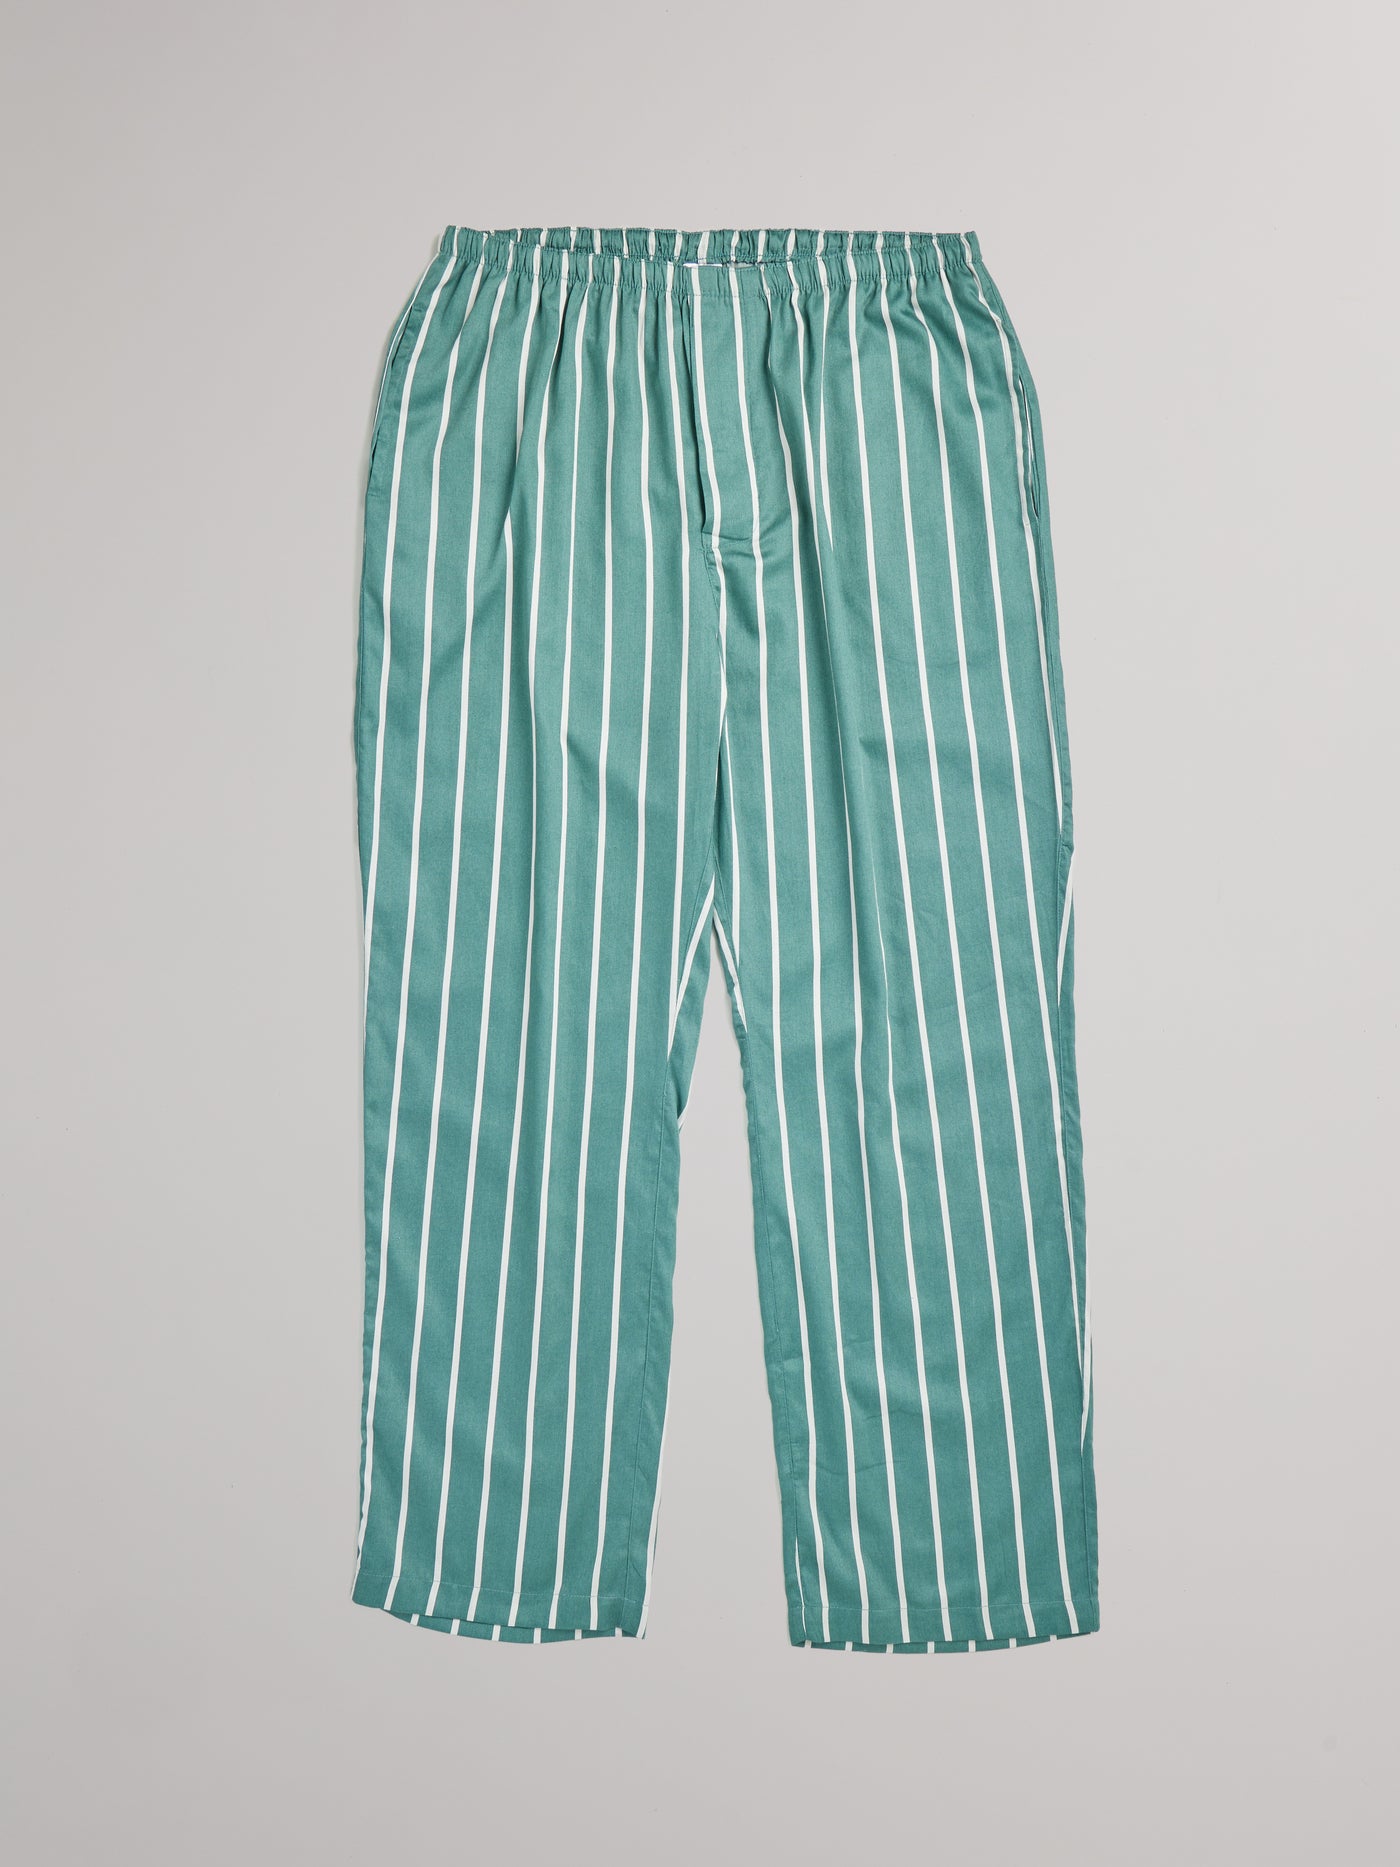 Sage Green Stripes Mens Pajama